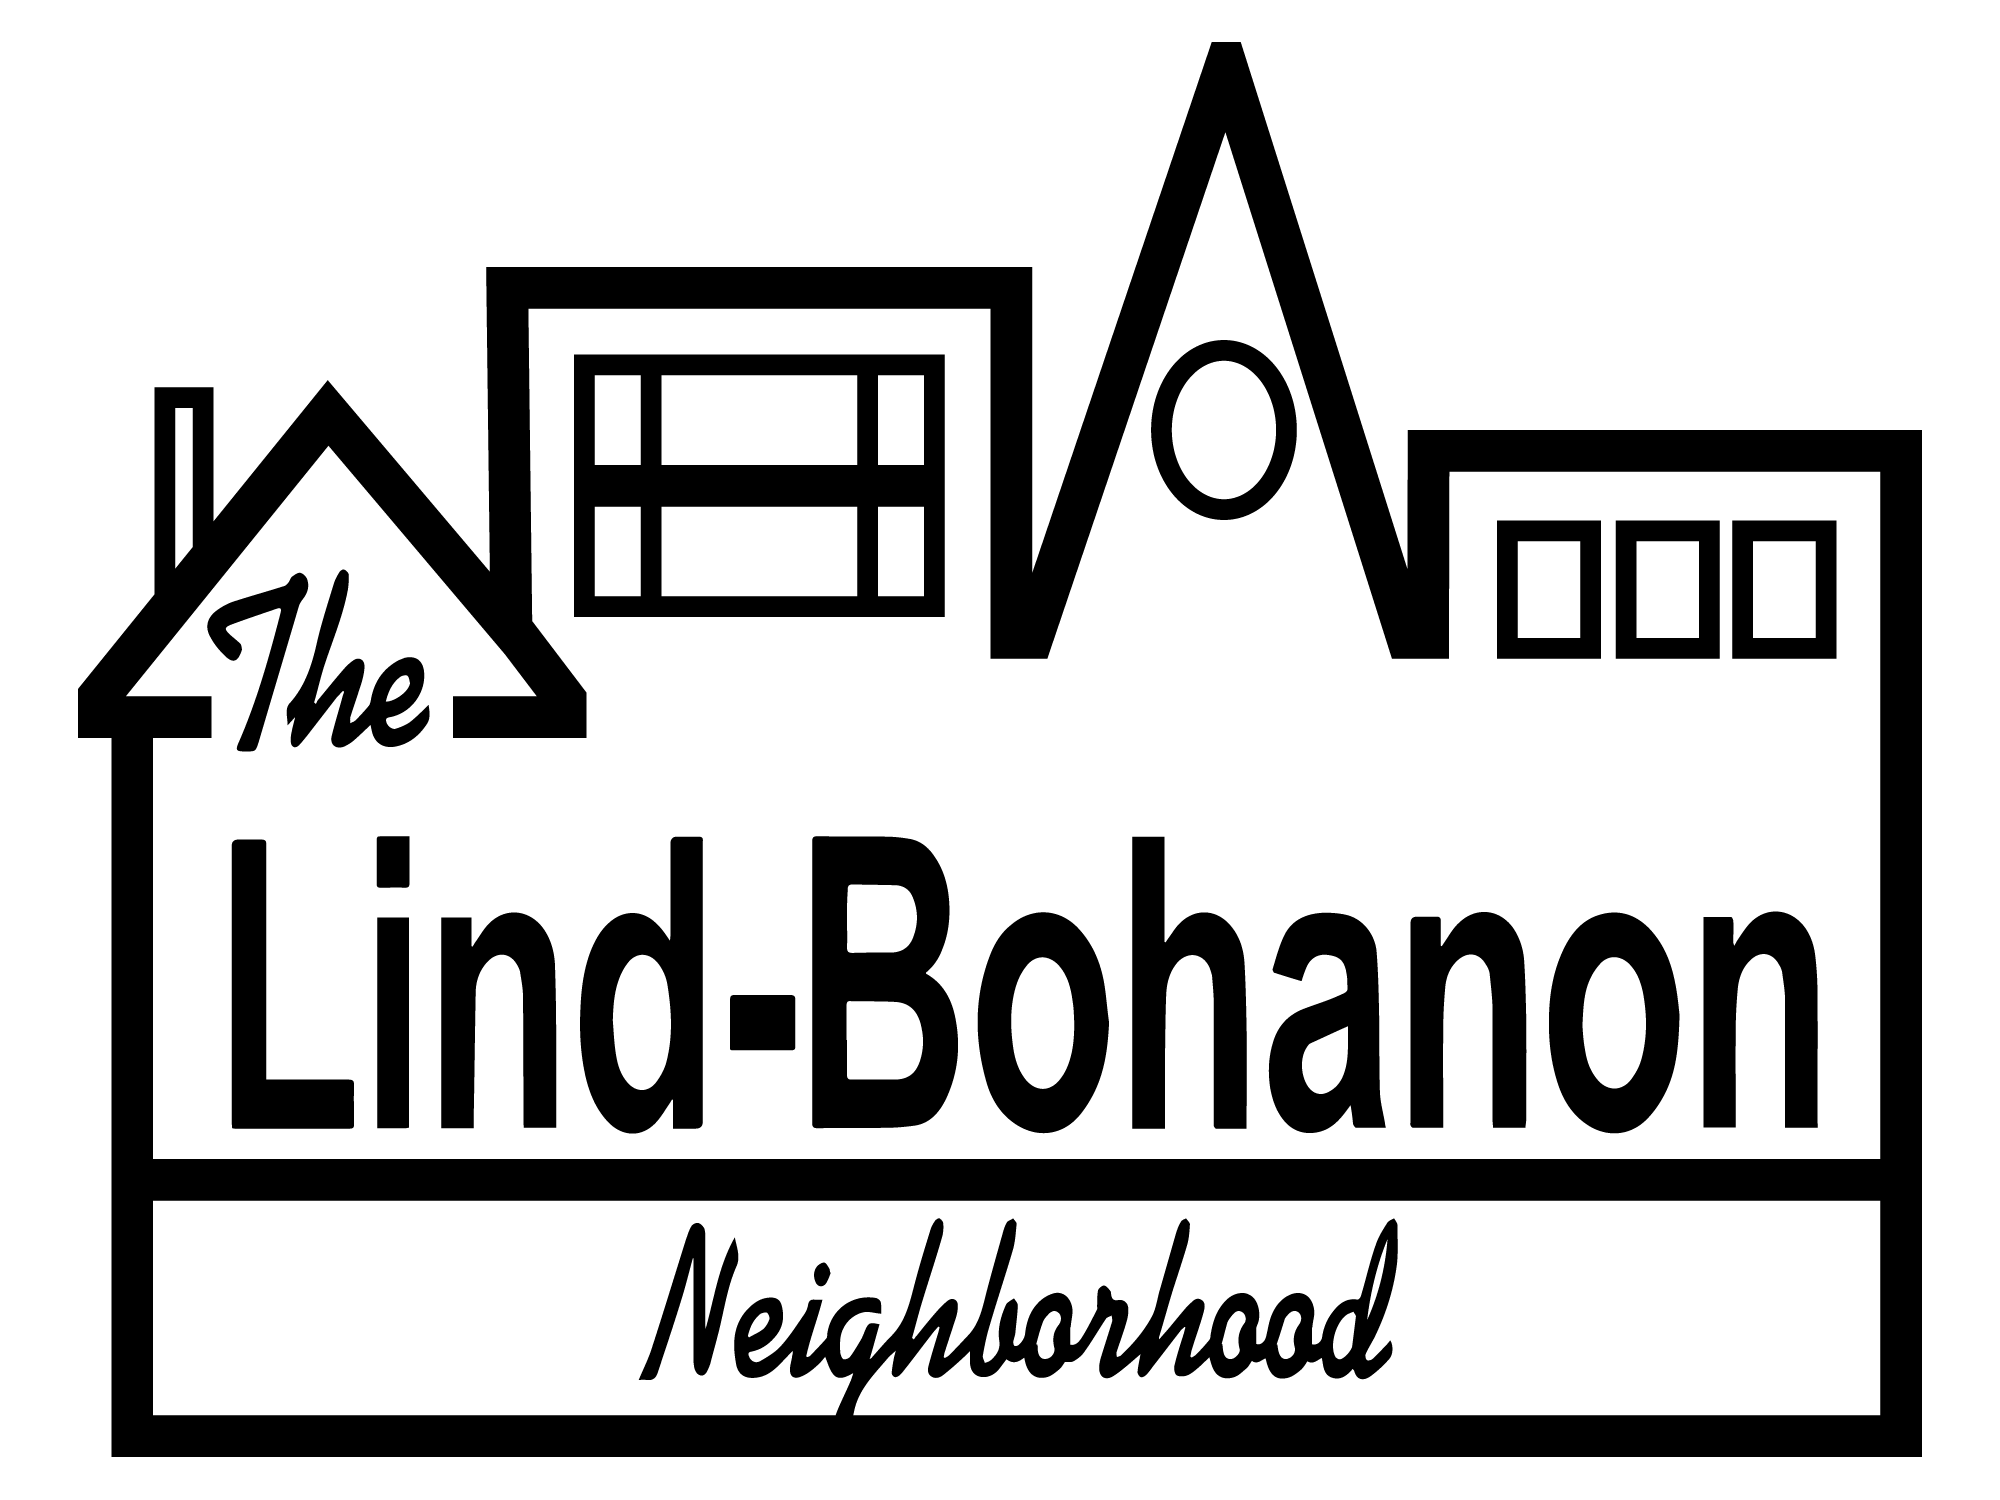 Lind-Bohanon logo set: black logo